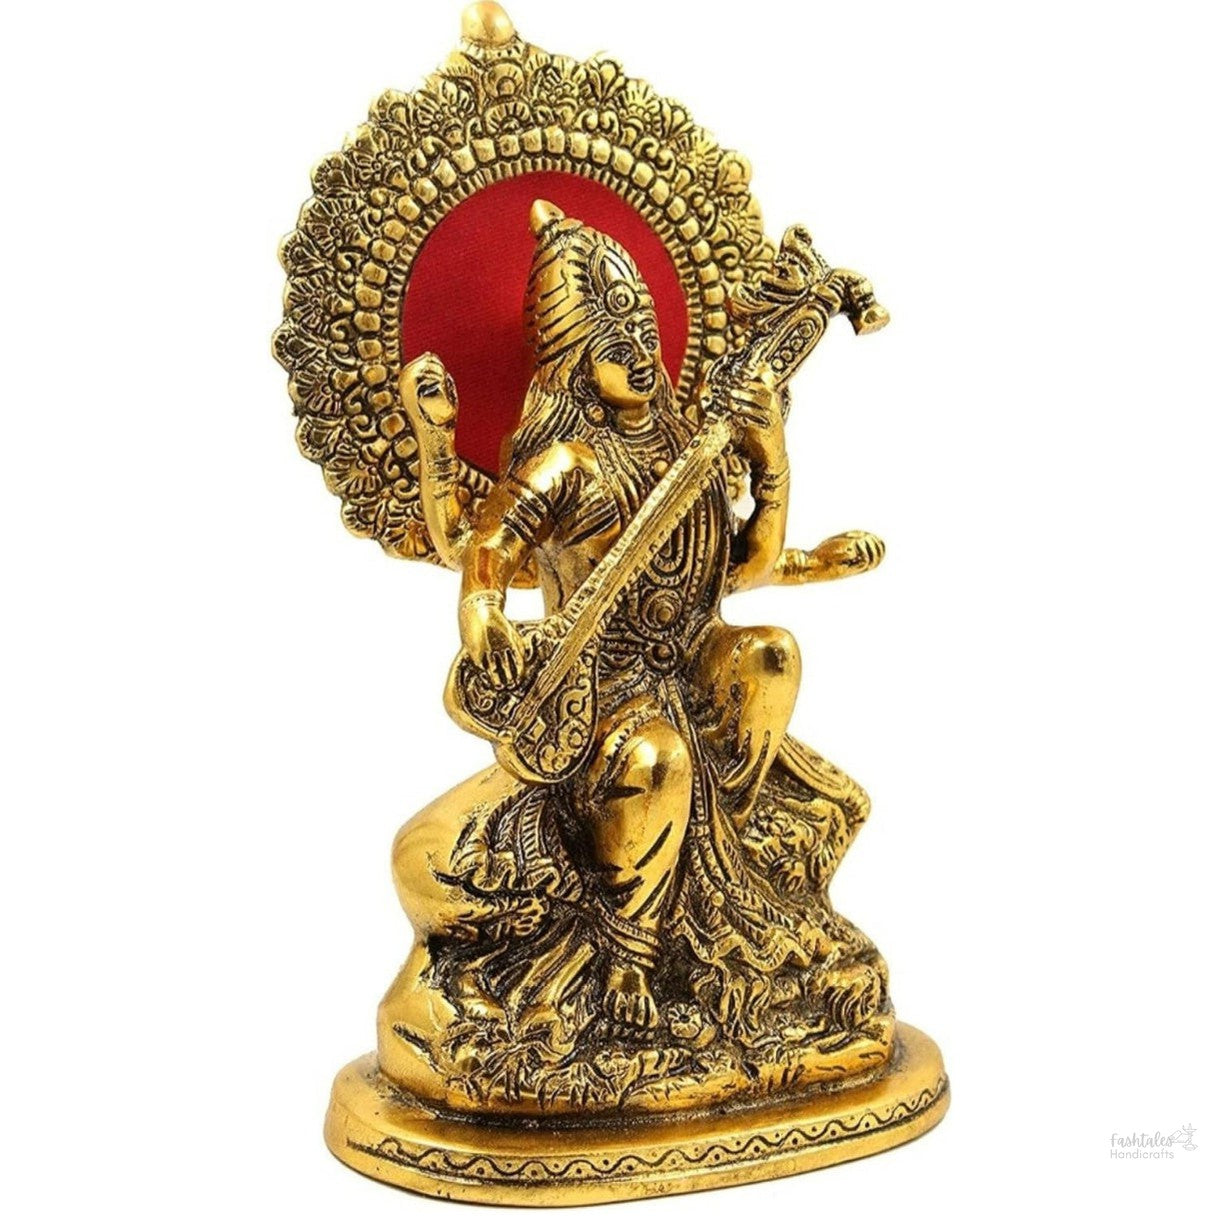 Gold Plated Maa Saraswati Metal Statue,Hindu Goddess Saraswati ji Murti for Pooja,Meditation,Office,Home,Study Table Decorative,Showpiece Figurines,Religious Idol Gift Article...